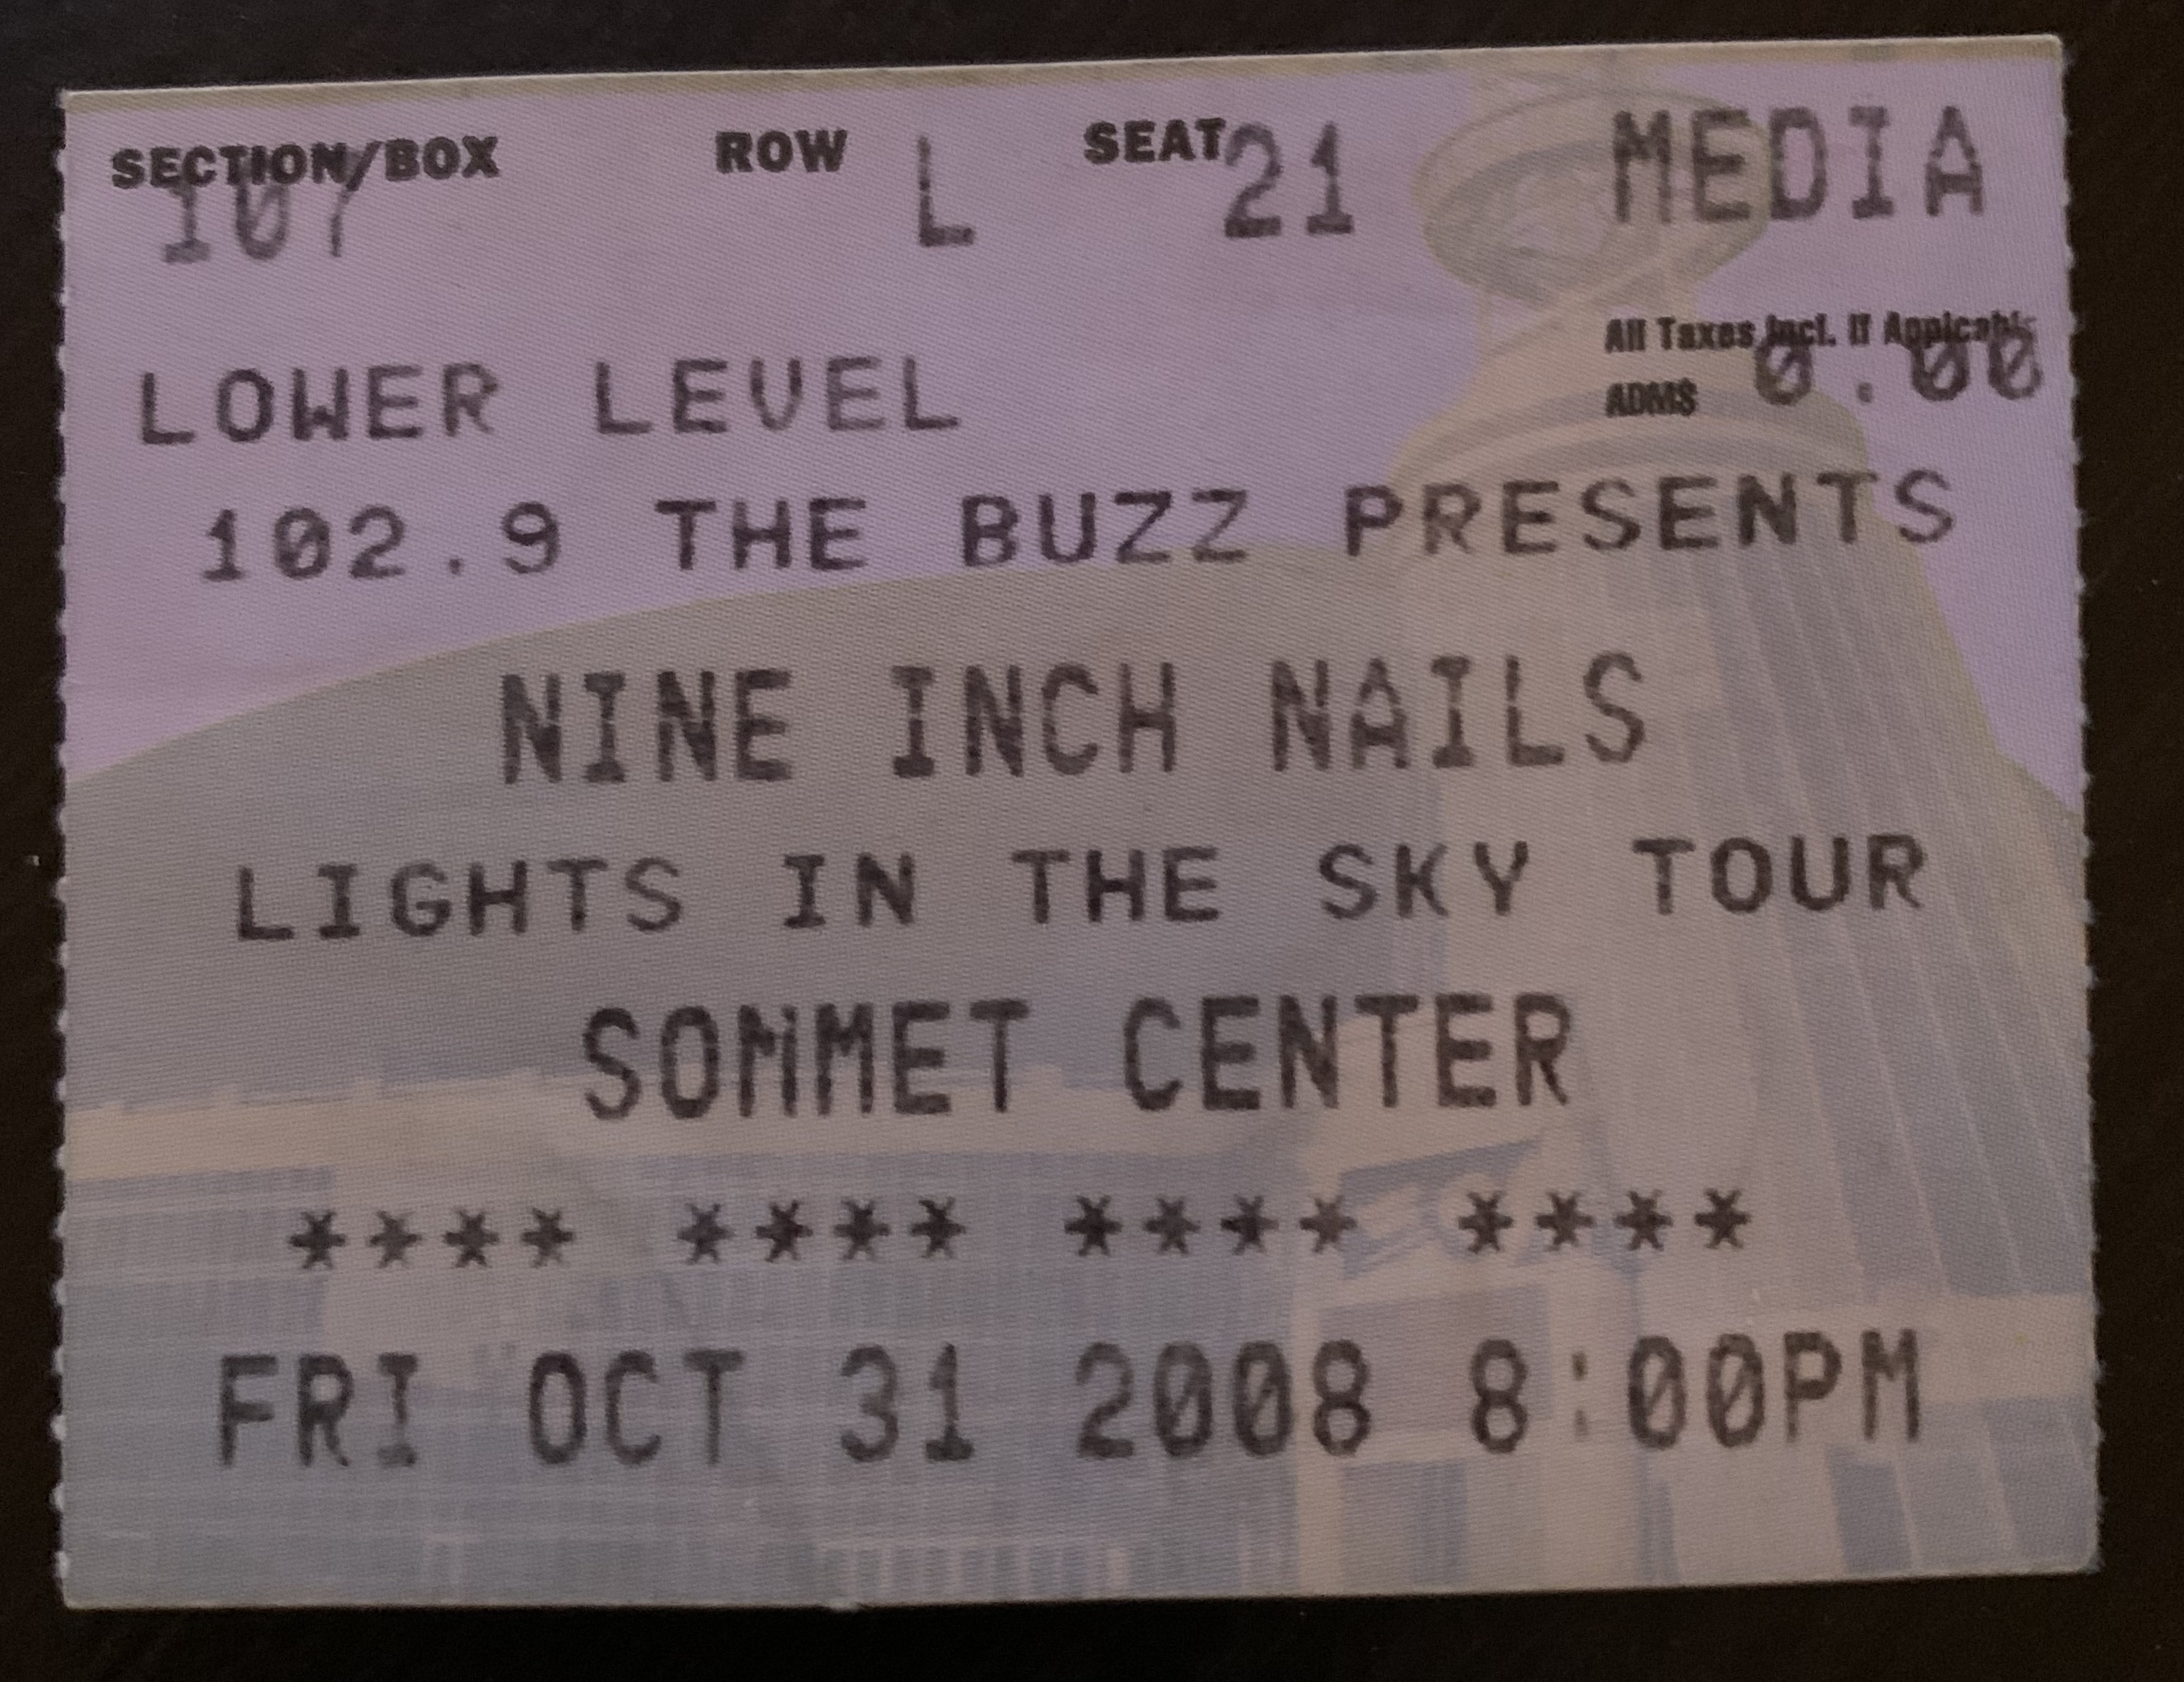 2008/10/31 Ticket